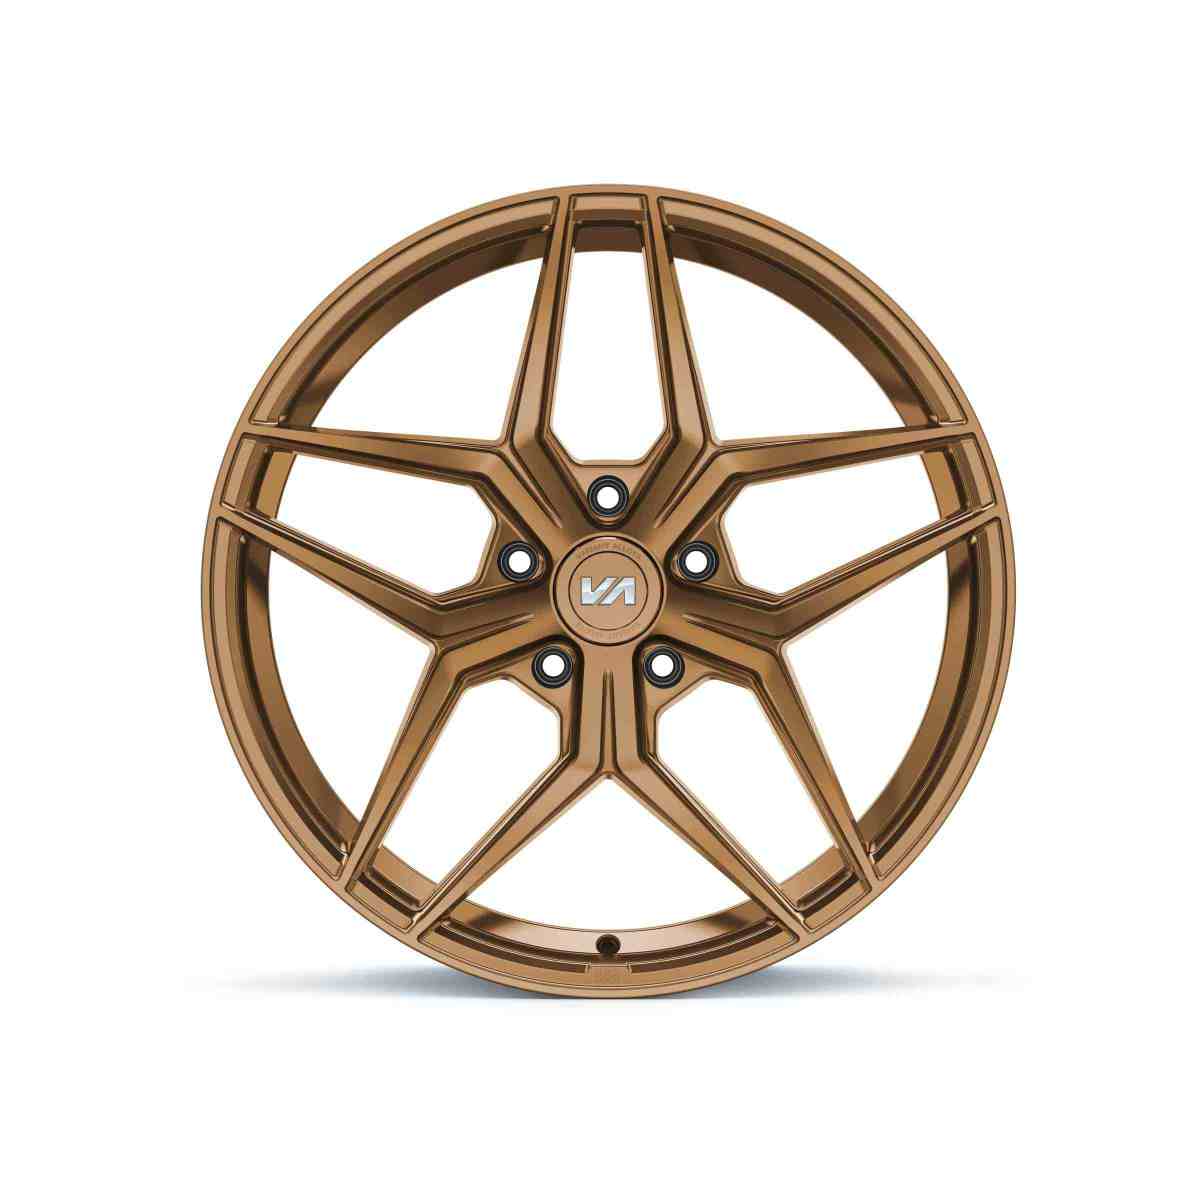 Kies-Motorsports Variant Variant Xenon (Brushed Bronze) Wheels